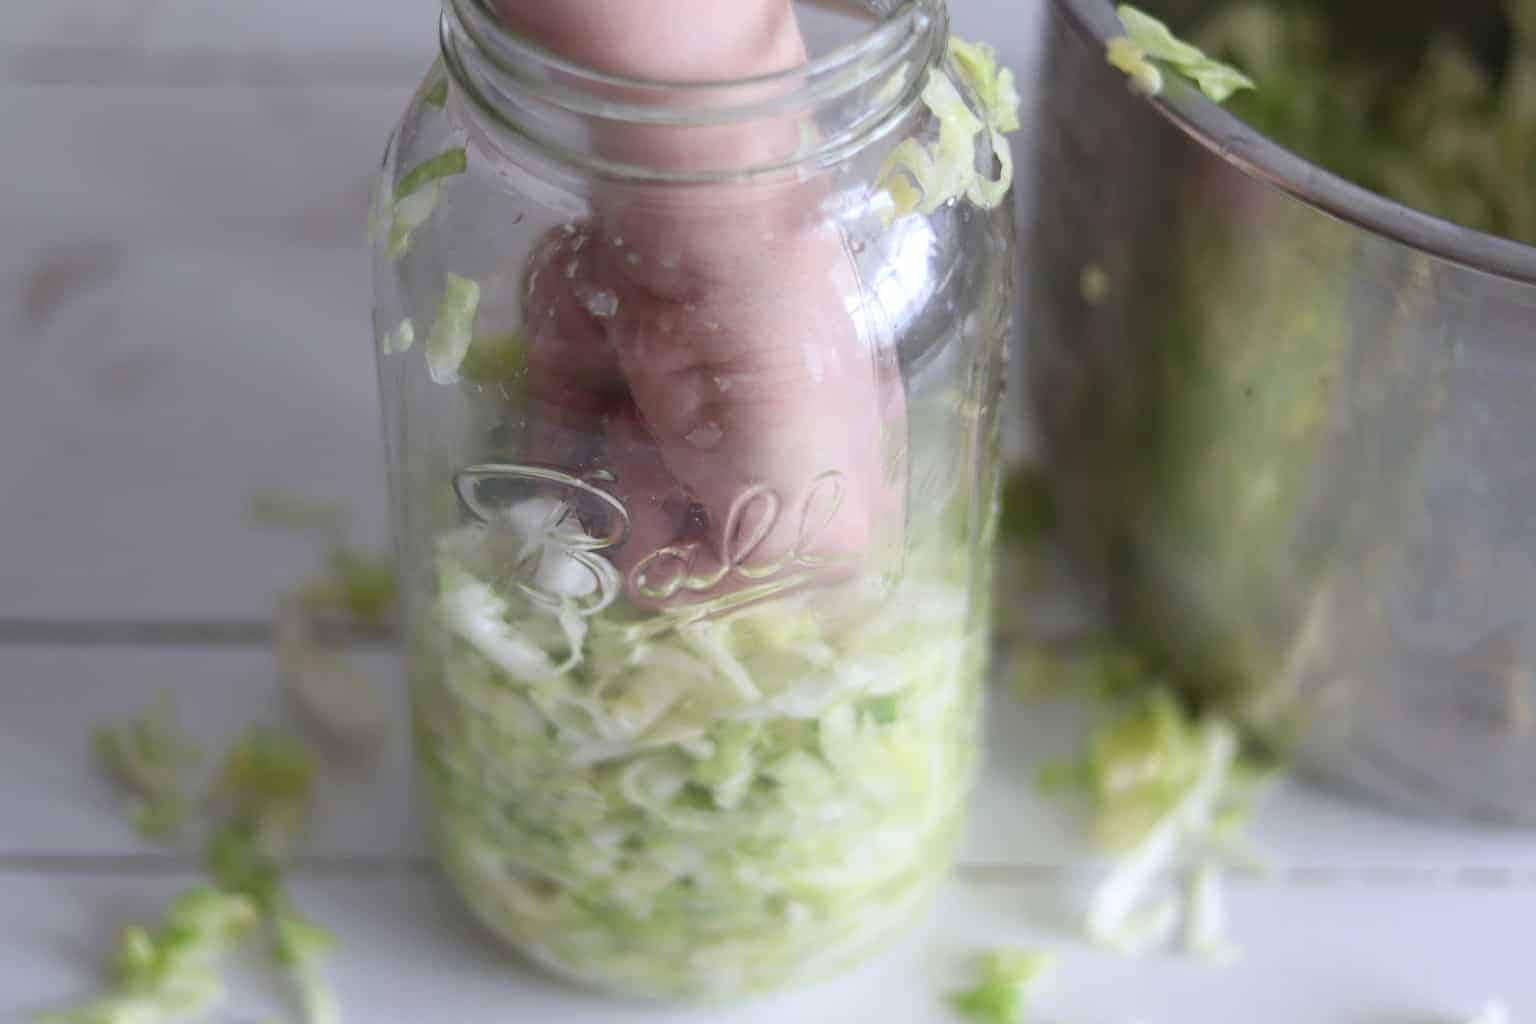 Hand punching cabbage into mason jar.